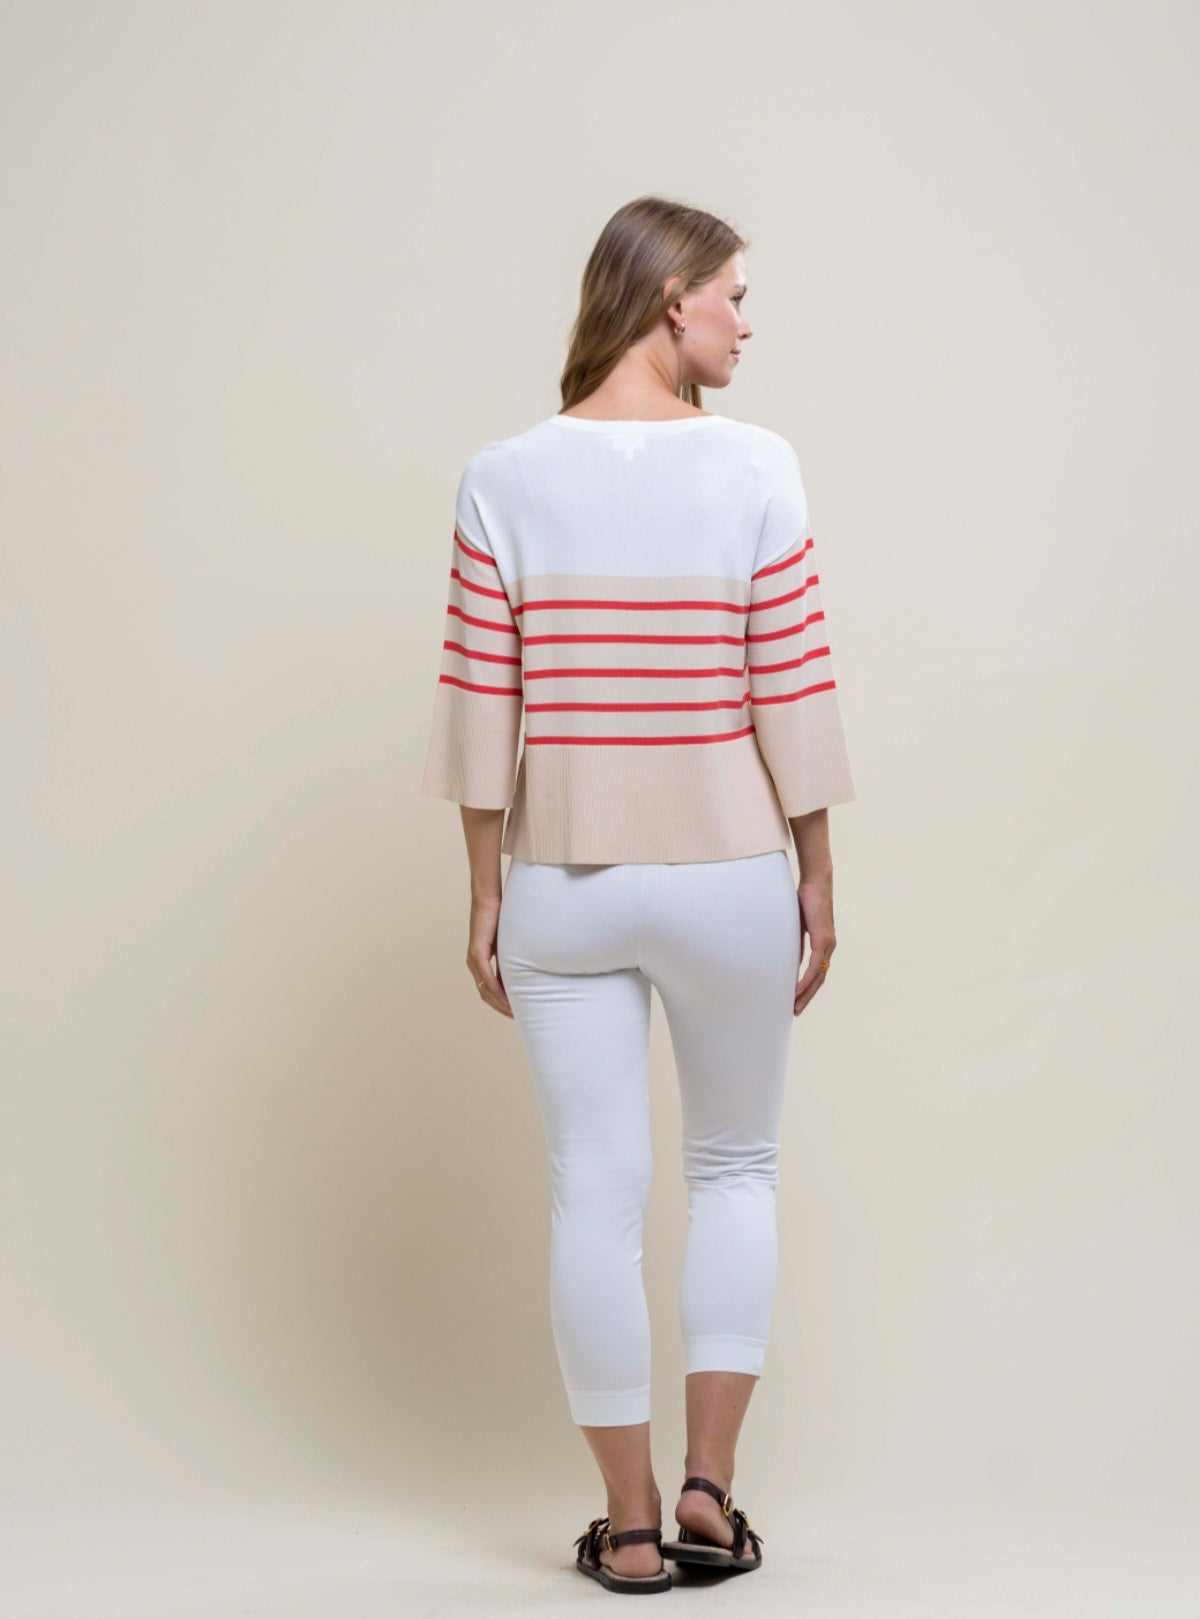 Hongo red horizontal striped light knit
Product code JL02H501